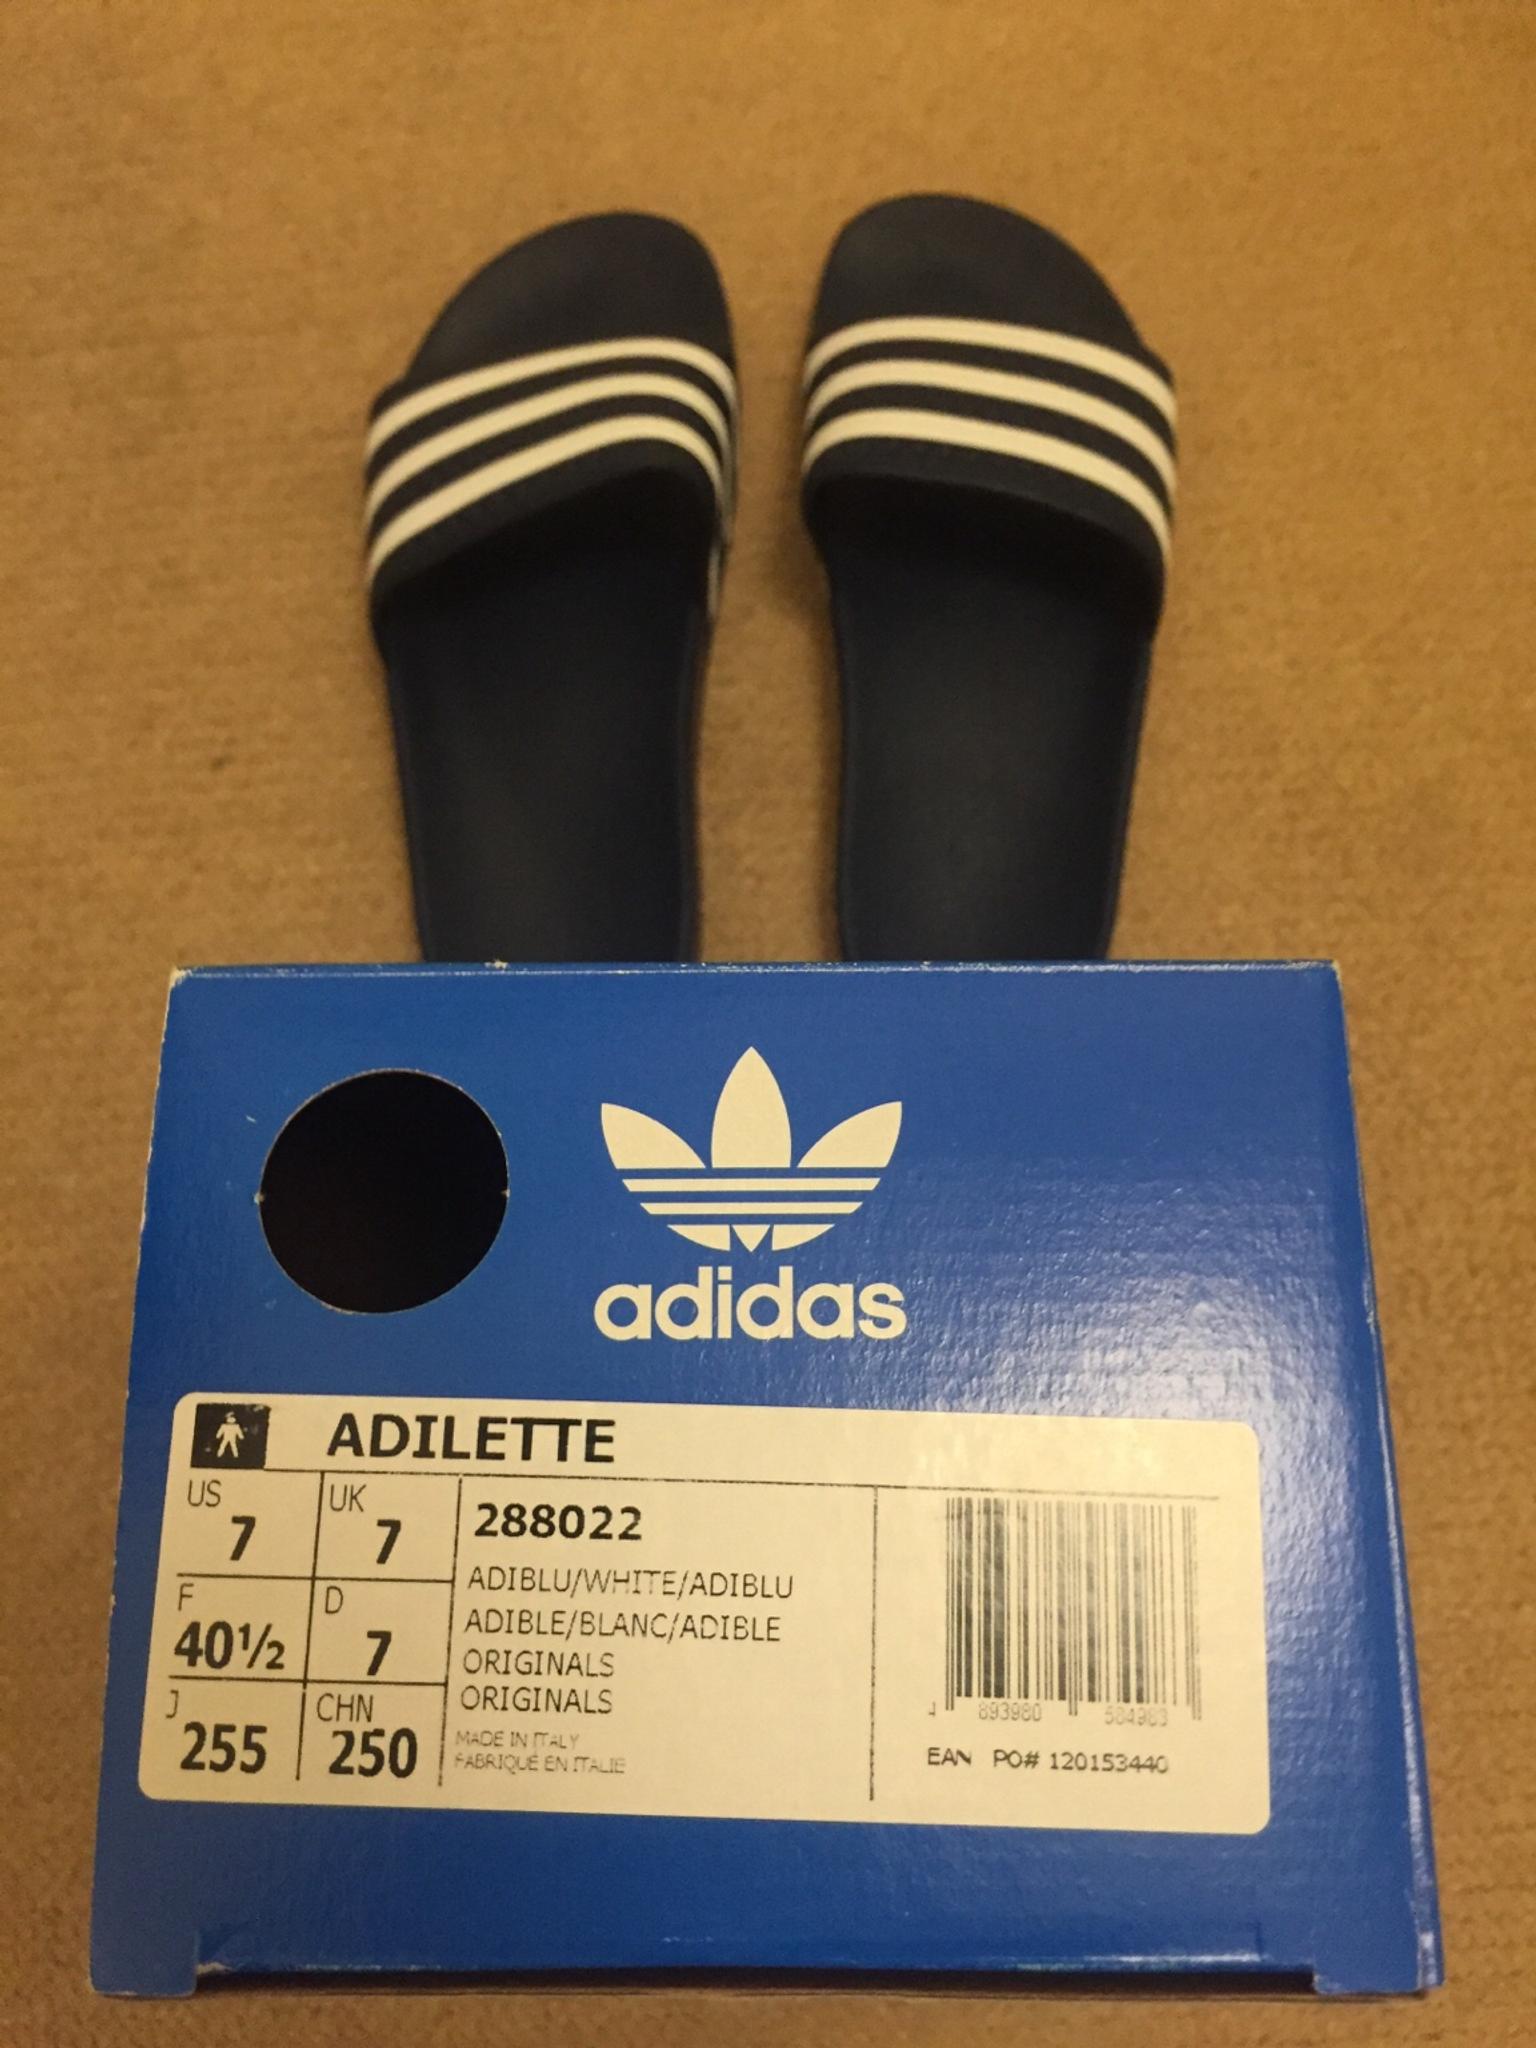 adidas adilette sandals size 7